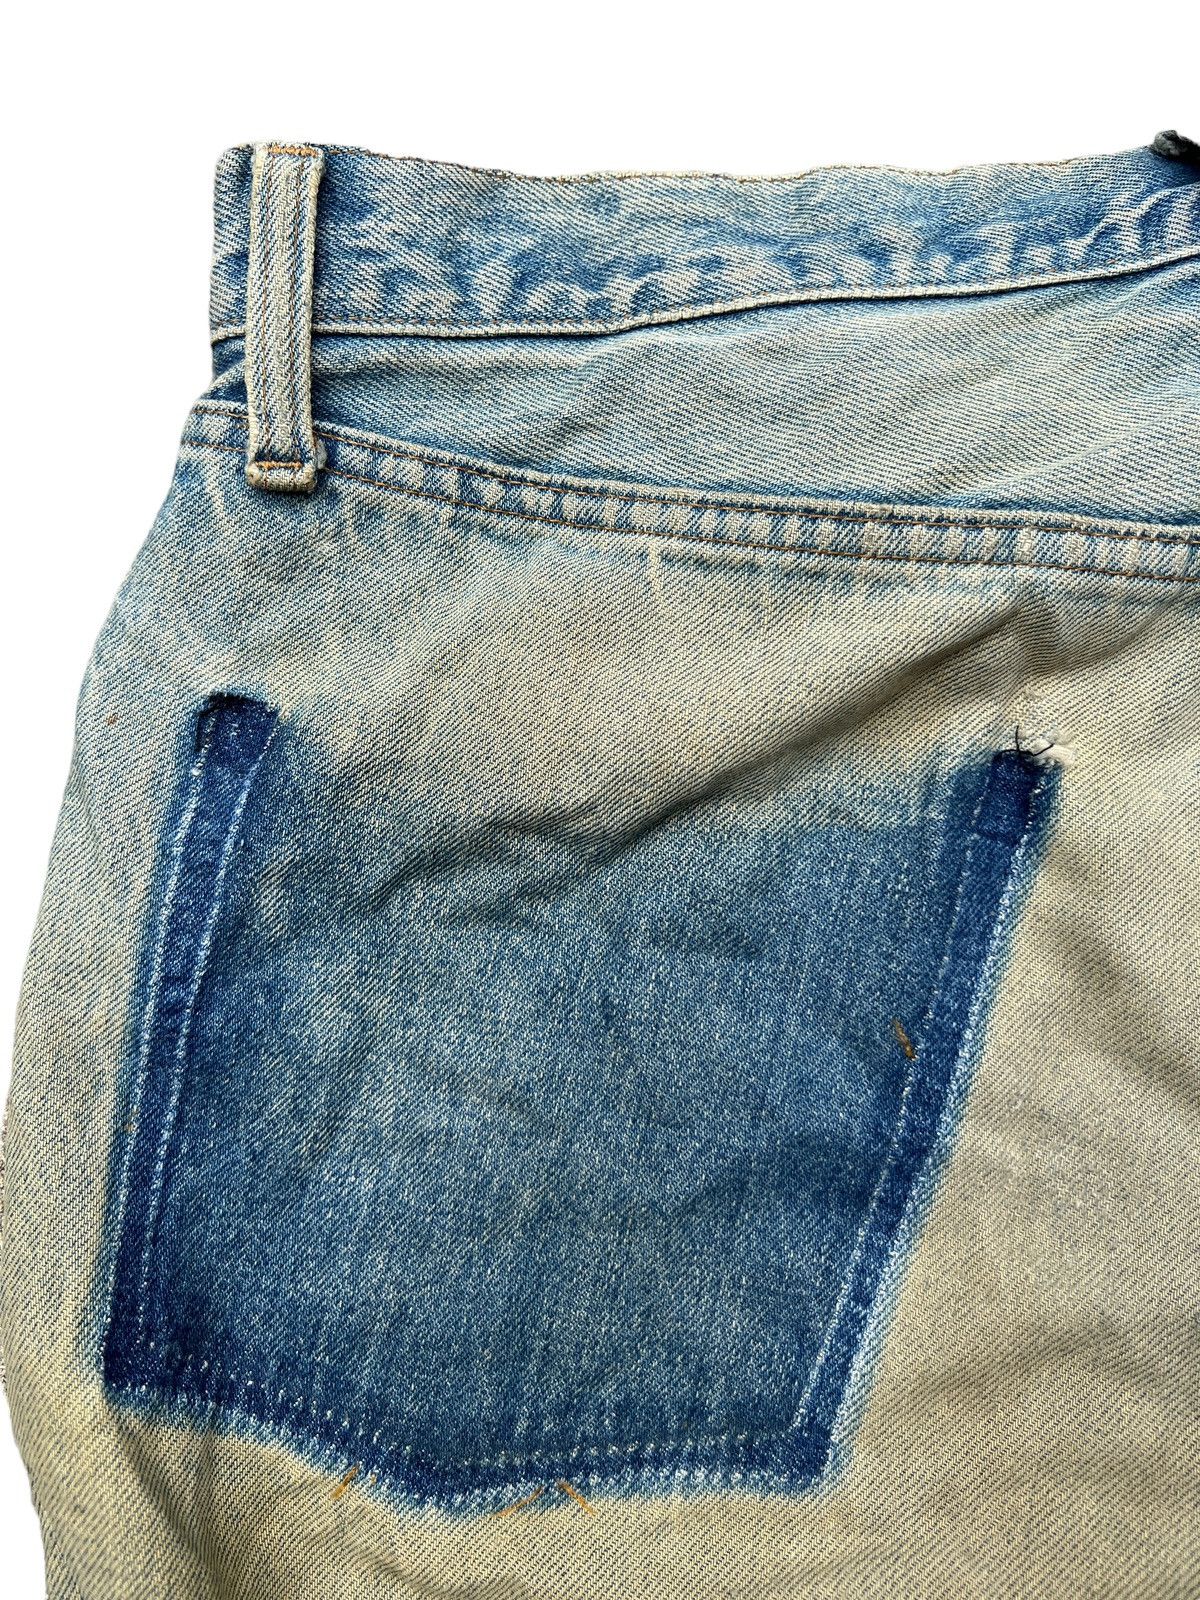 Vintage 70s Levi’s 501 Selvedge Distressed Denim Jeans 32x31 - 12